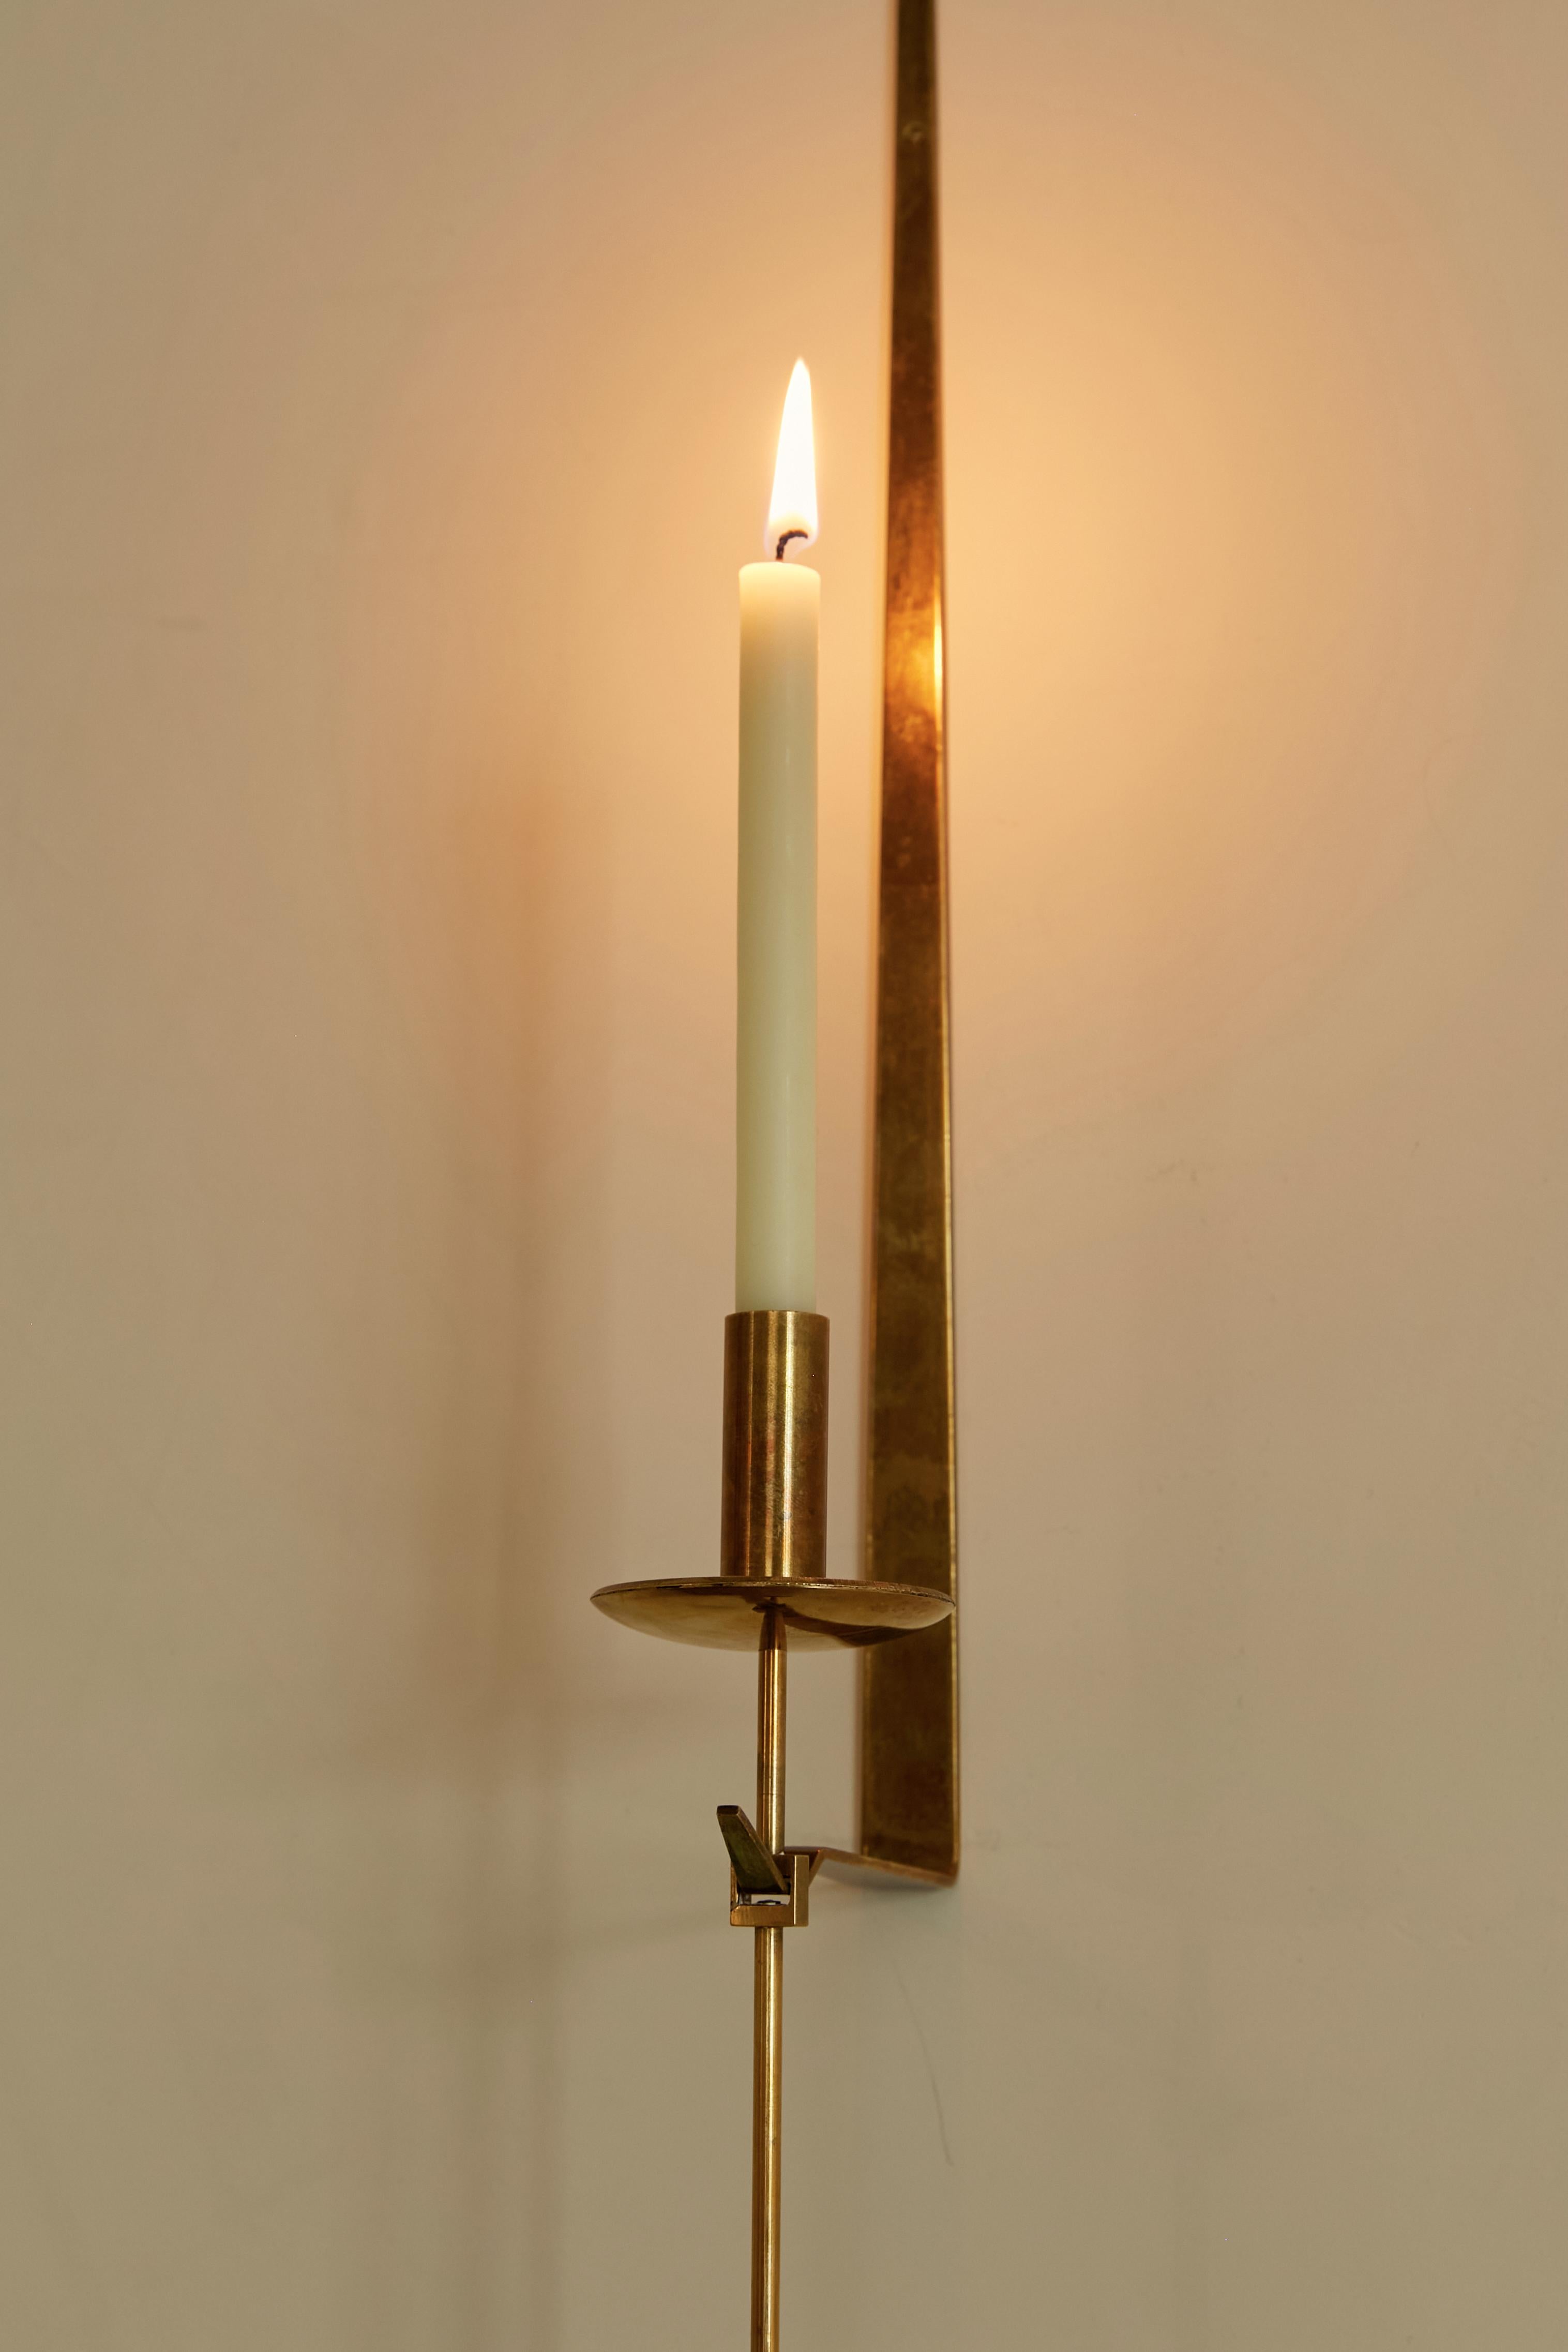 Wall candleholder in pendulum shape. Brass material, lightweight. For normal long shaped candles.